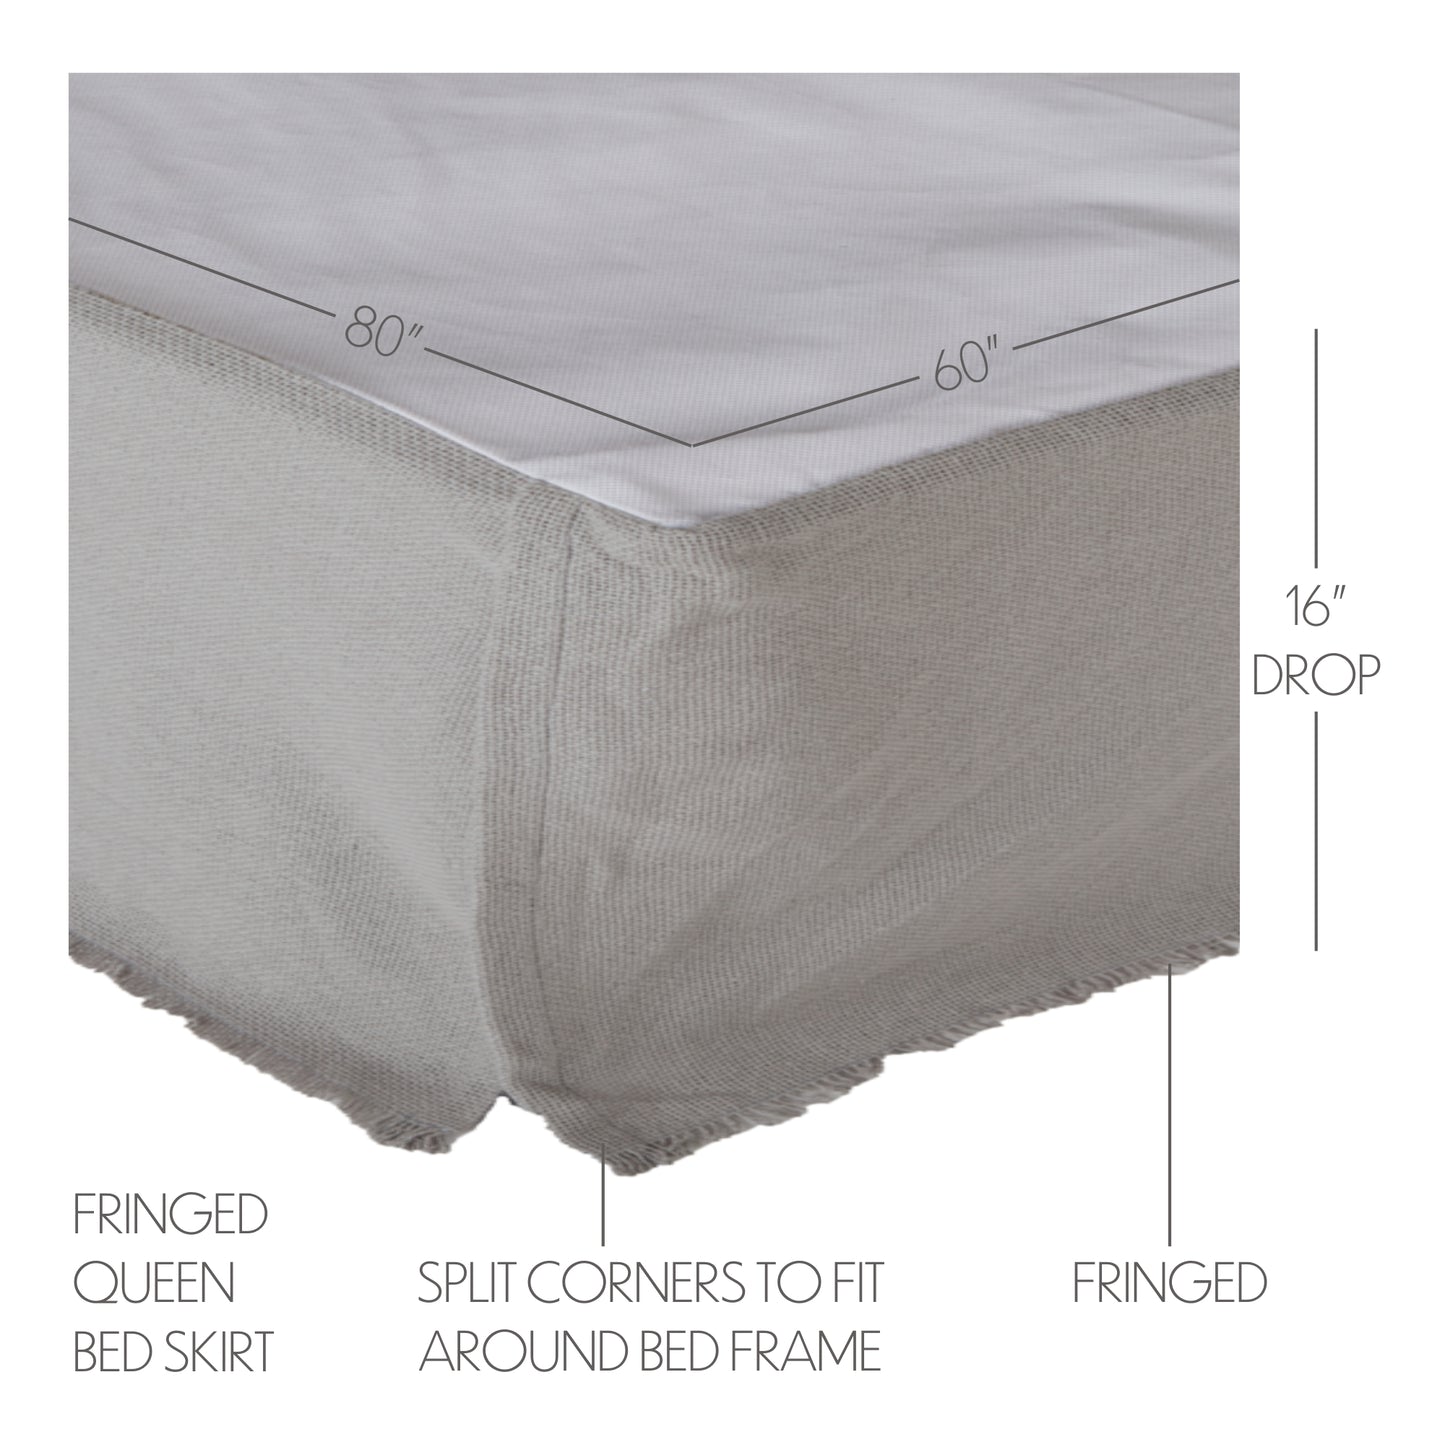 70051-Burlap-Dove-Grey-Fringed-Queen-Bed-Skirt-60x80x16-image-2